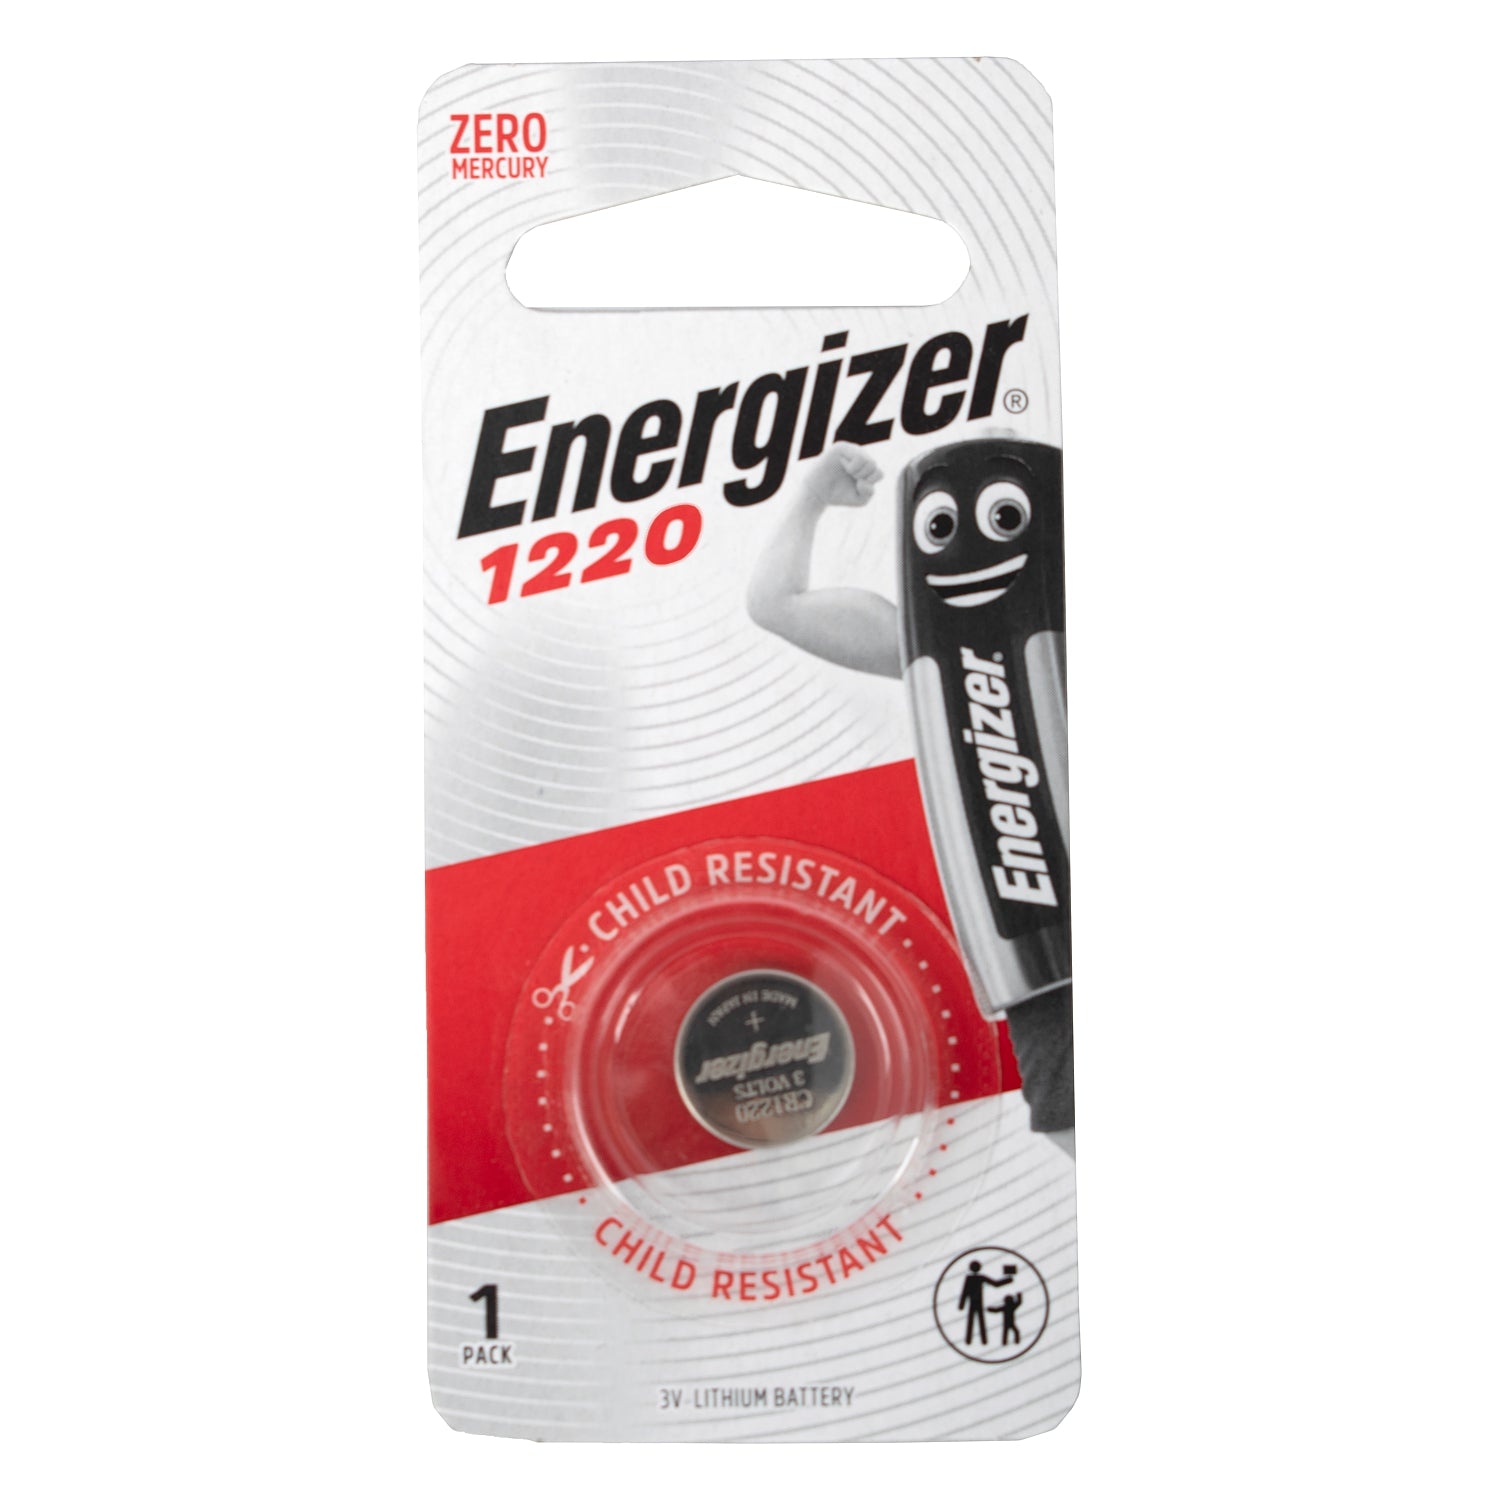 Energizer 1220 3v lithium coin battery (1 pack)  (moq 12)